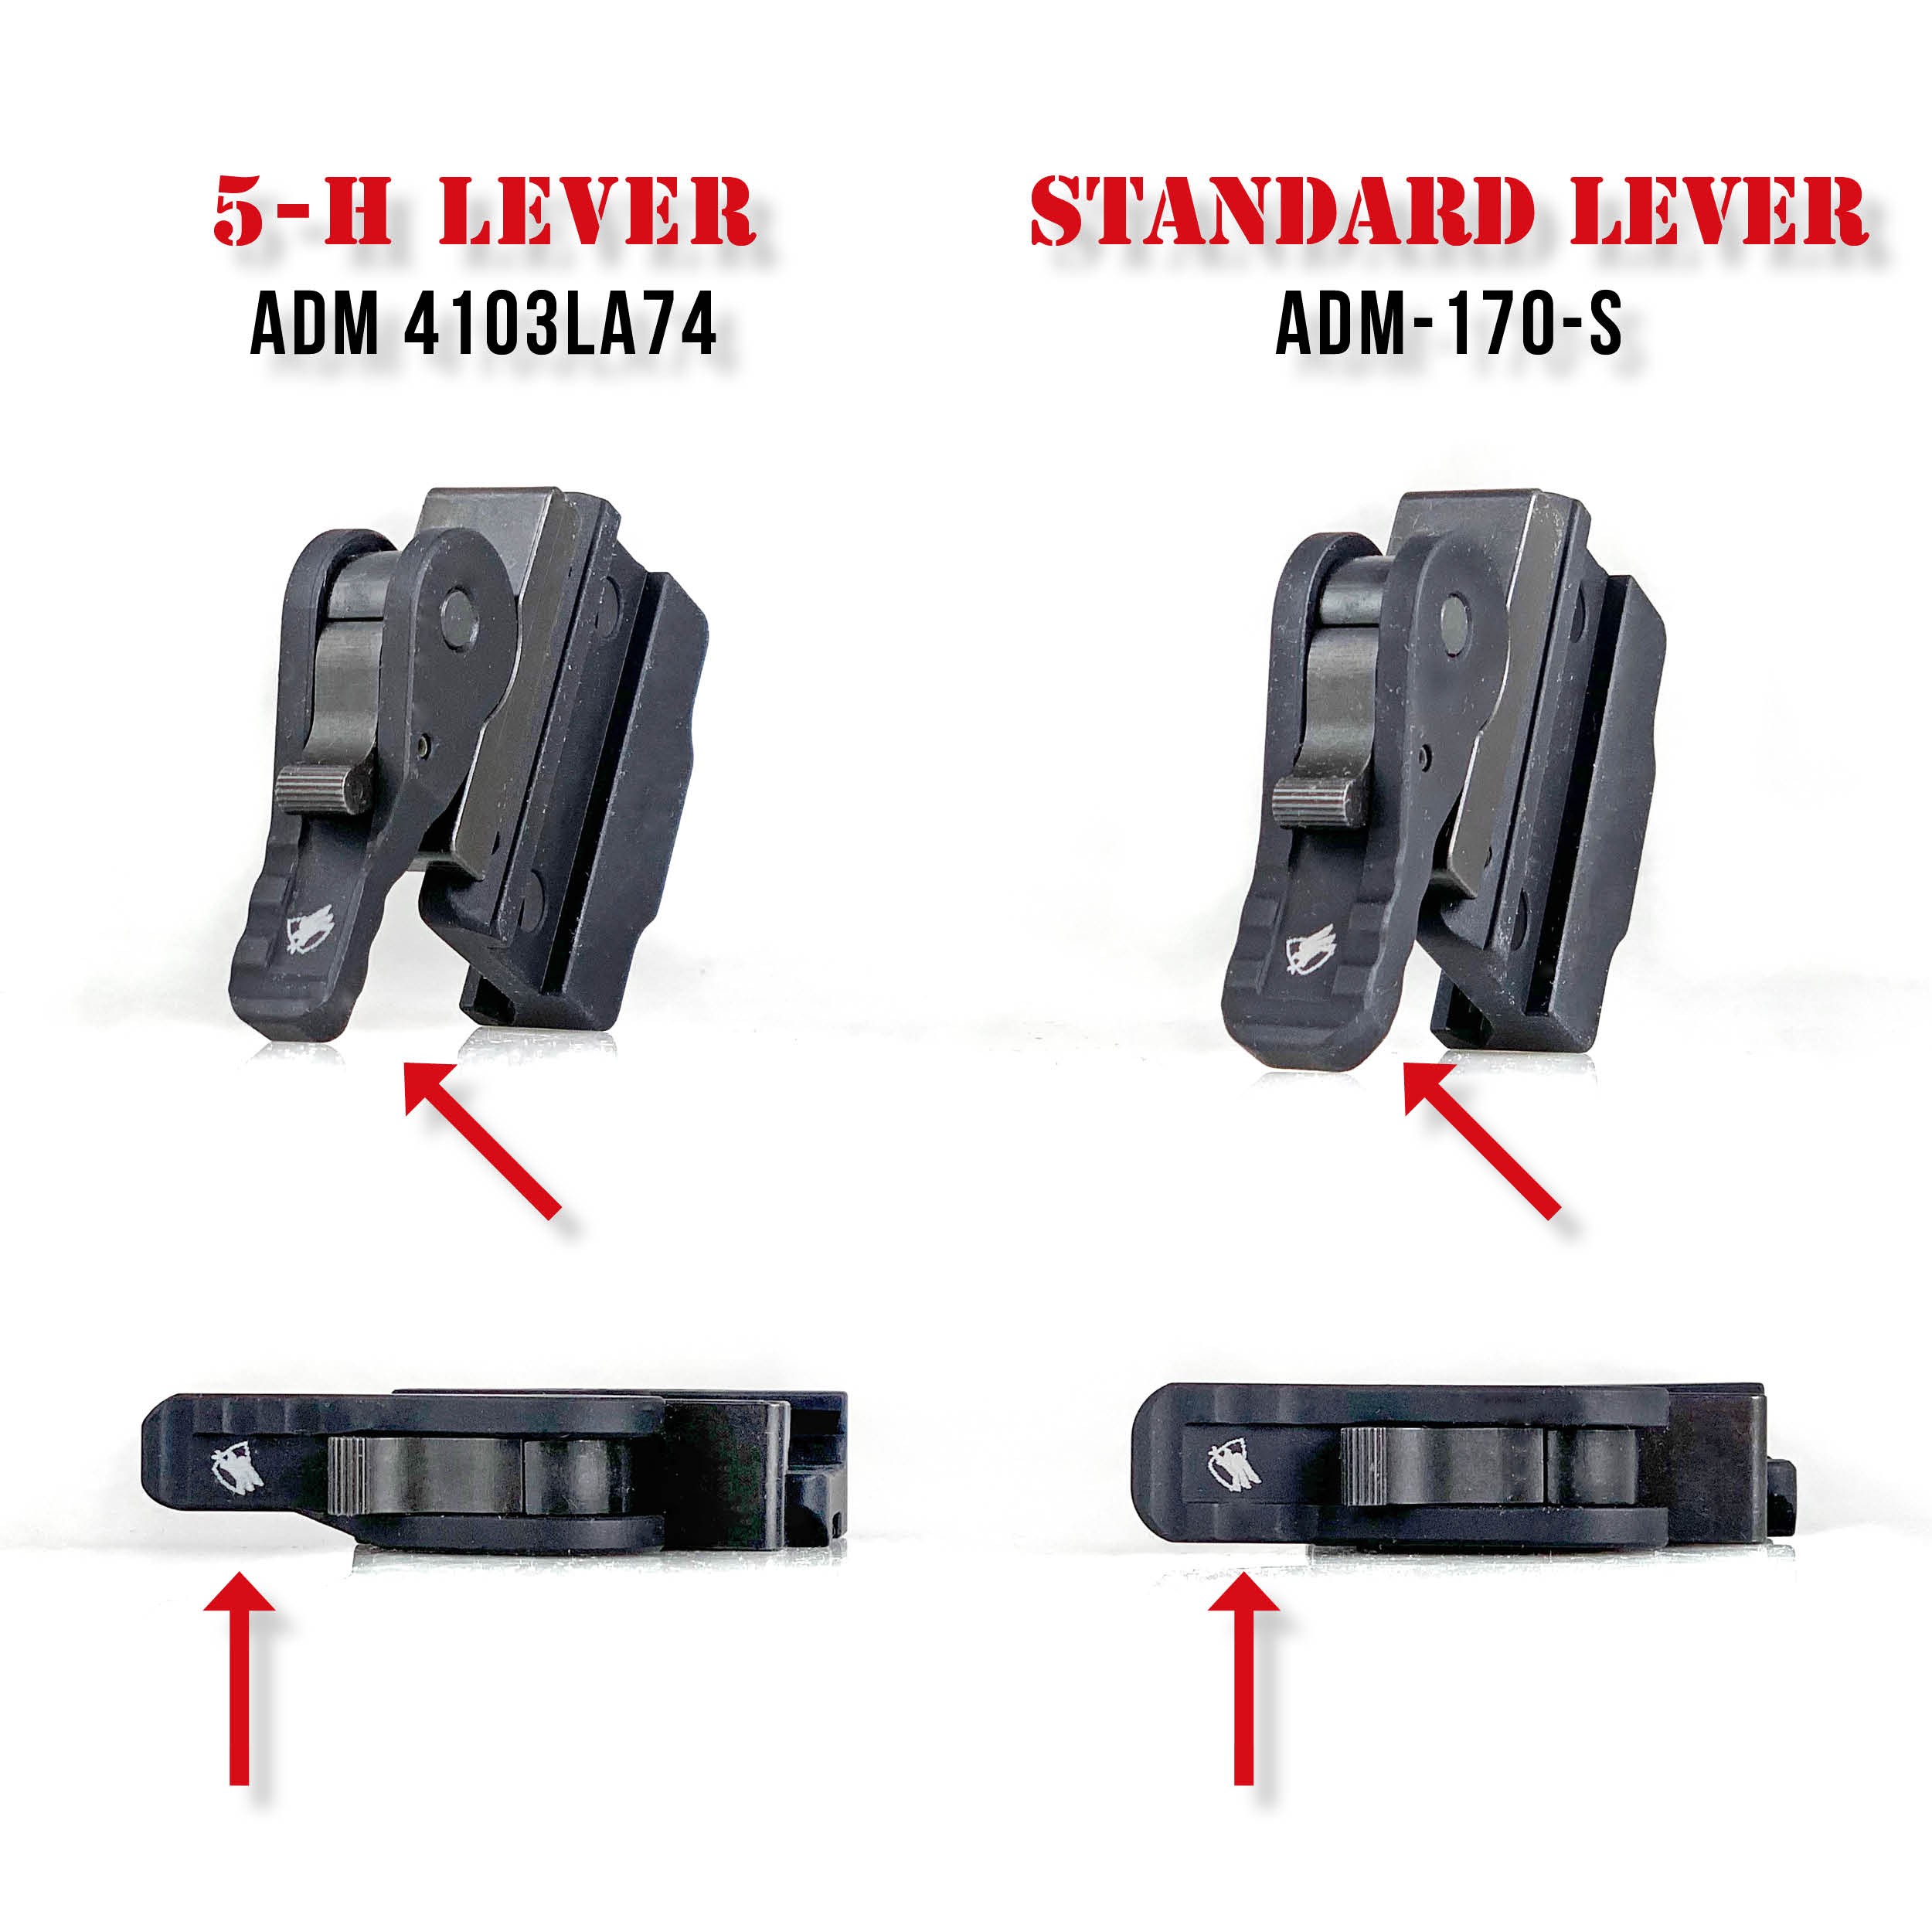 ADM-5-H Lever and ADM-170-S Lever Comparison